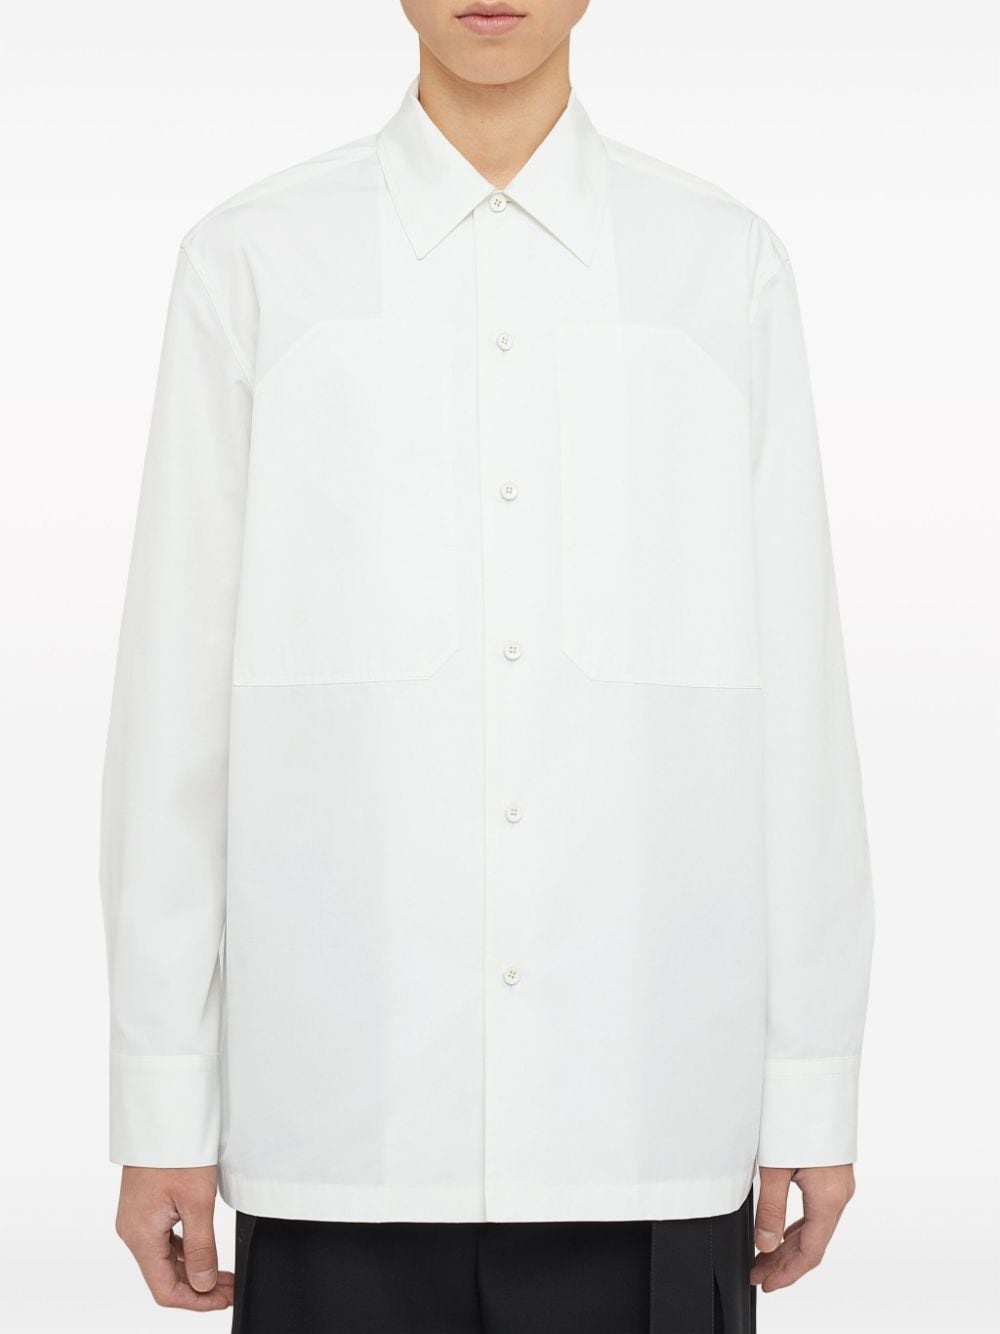 patch pockets cotton shirt - 5